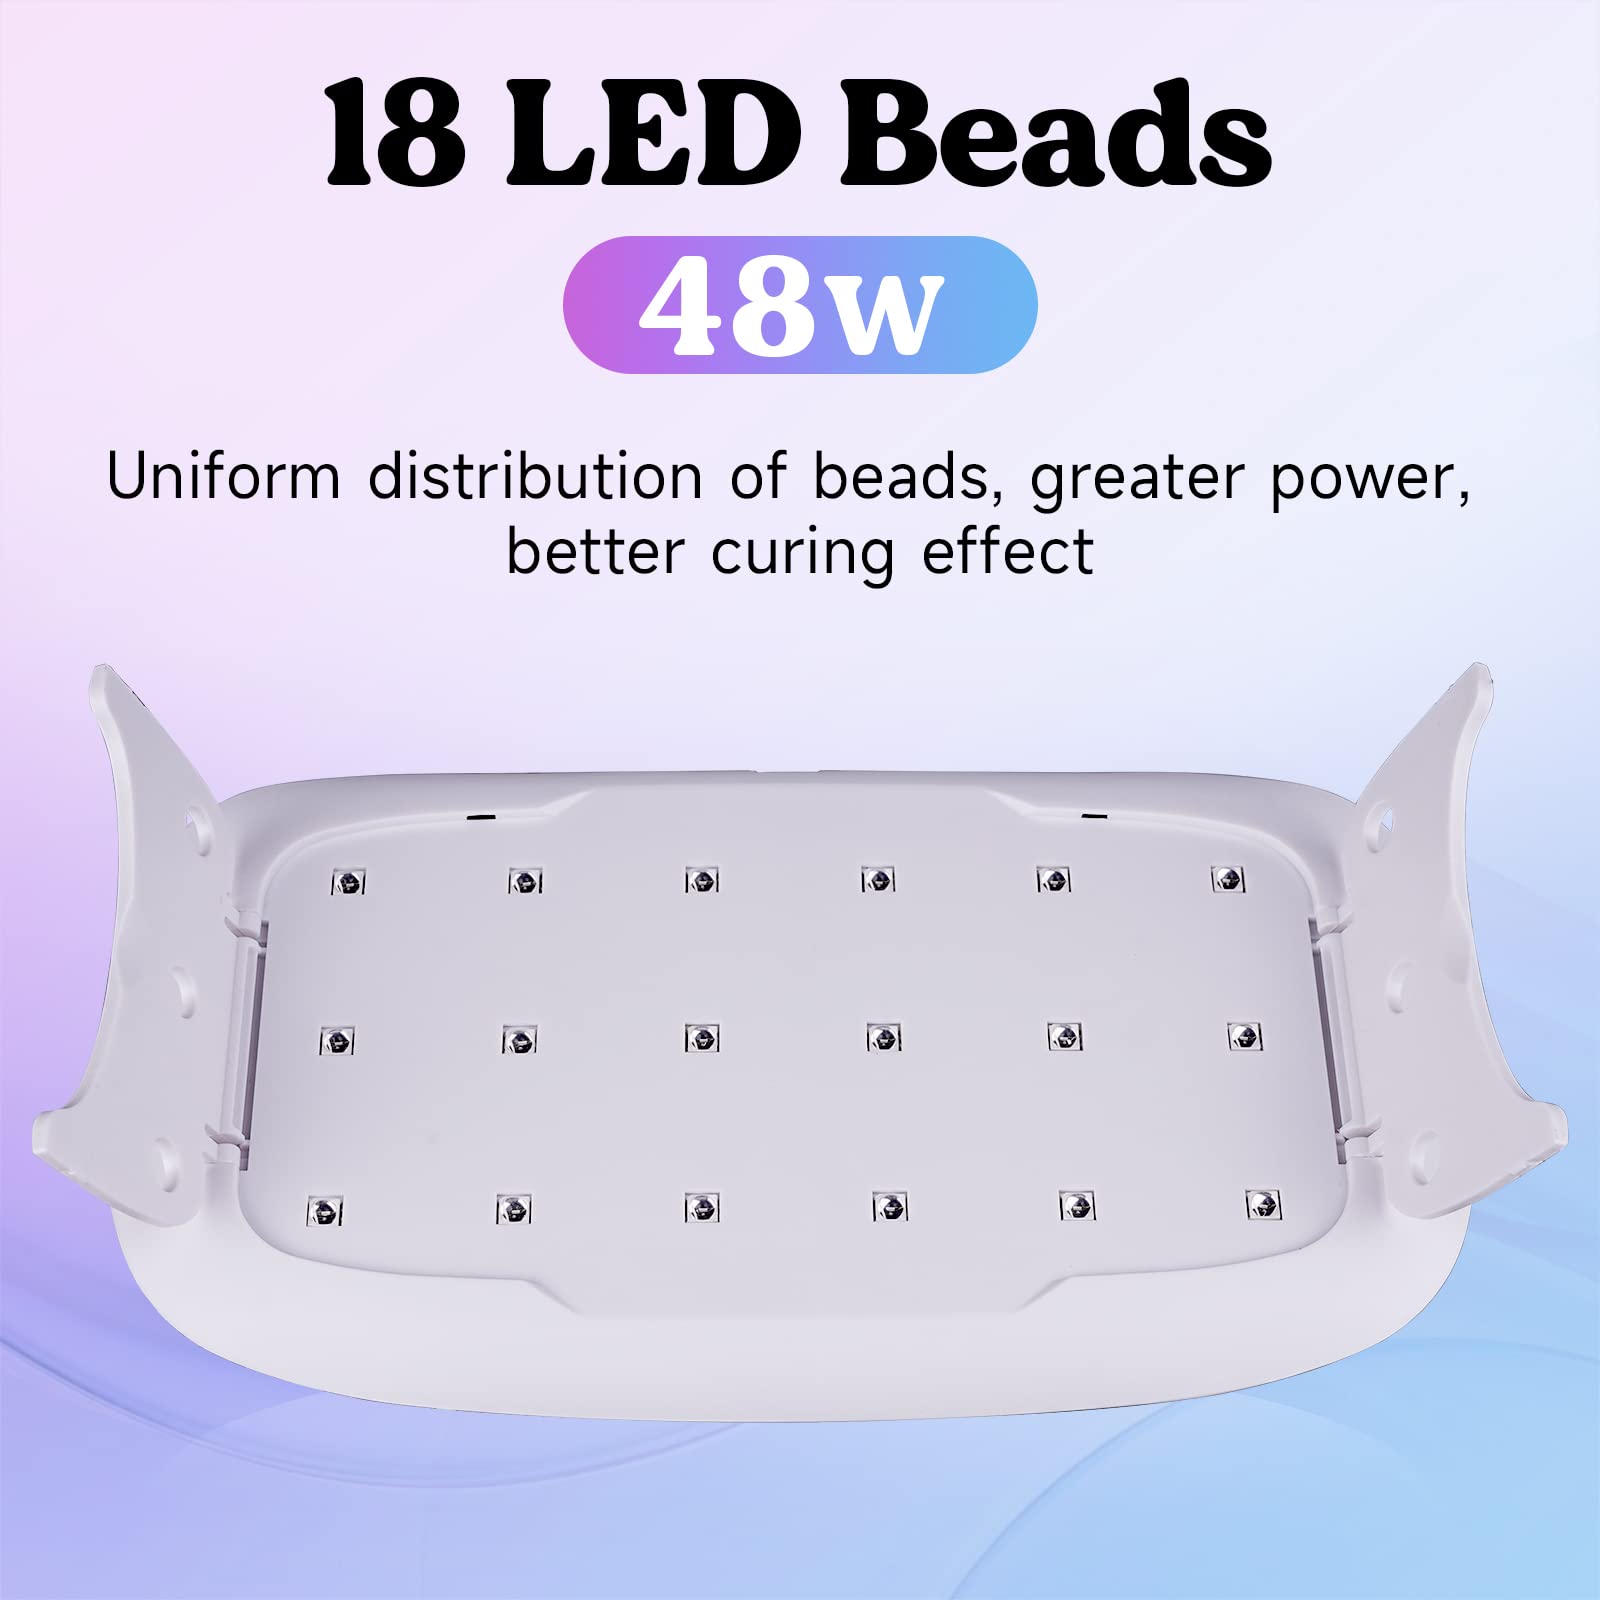 Portable Mini UV Lamp UV Light UV Resin Curing Lamp USB Charge for